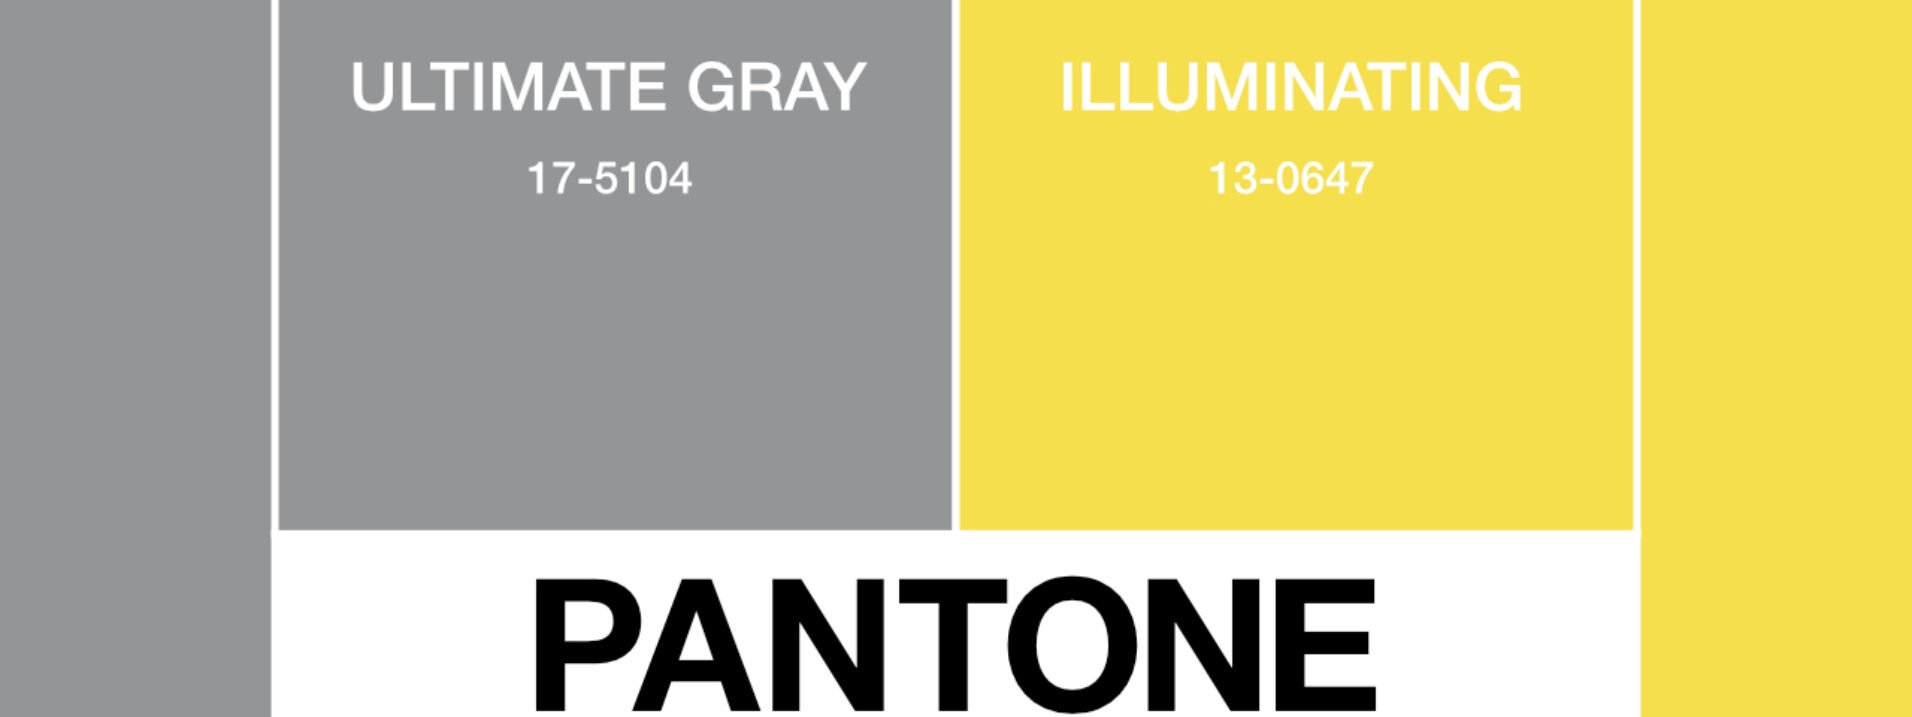 pantone color of the year 2021 illuminating